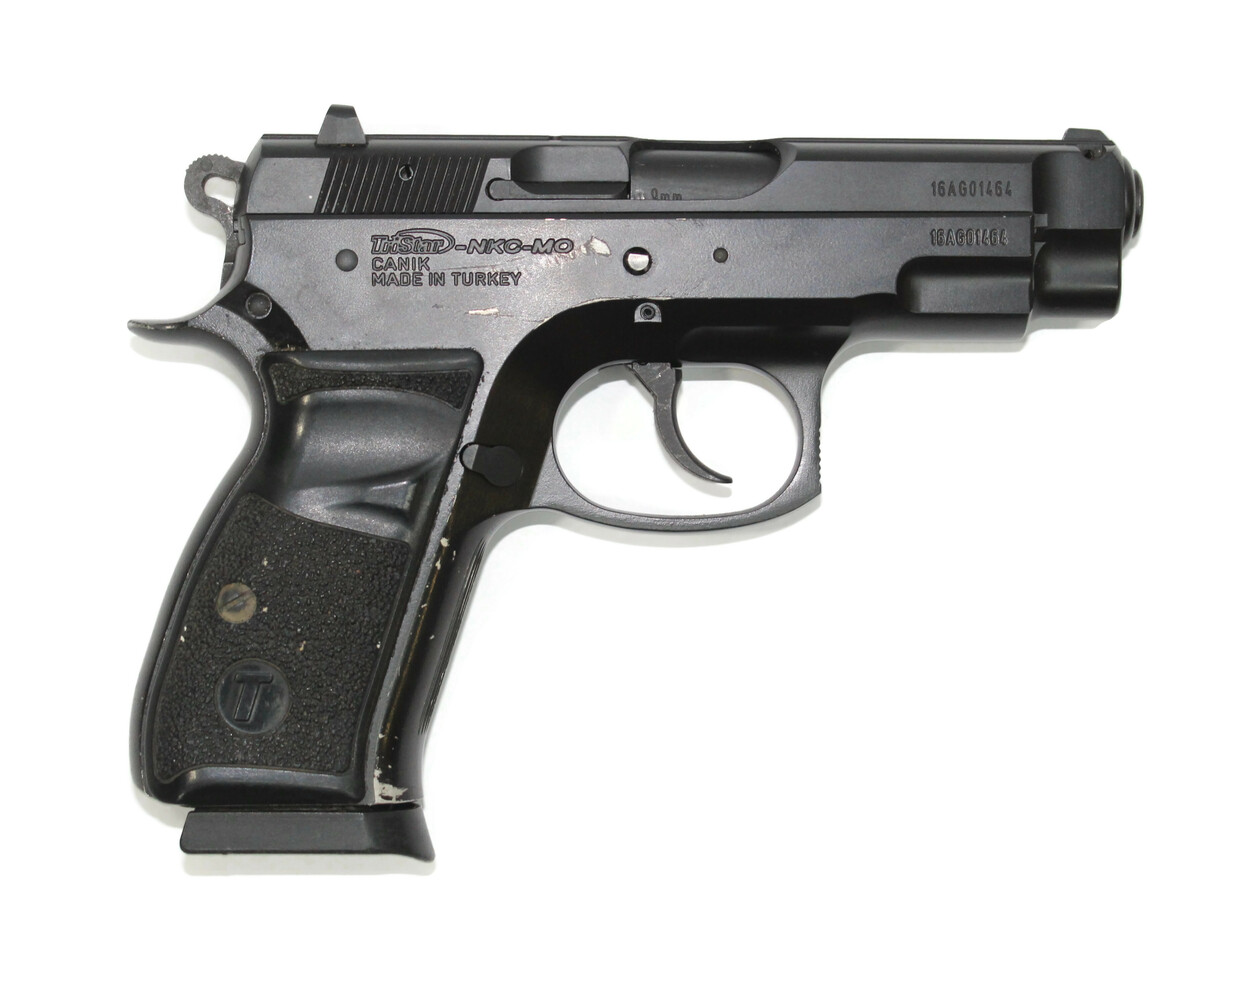 CANIK C100 9mm Compact Pistol